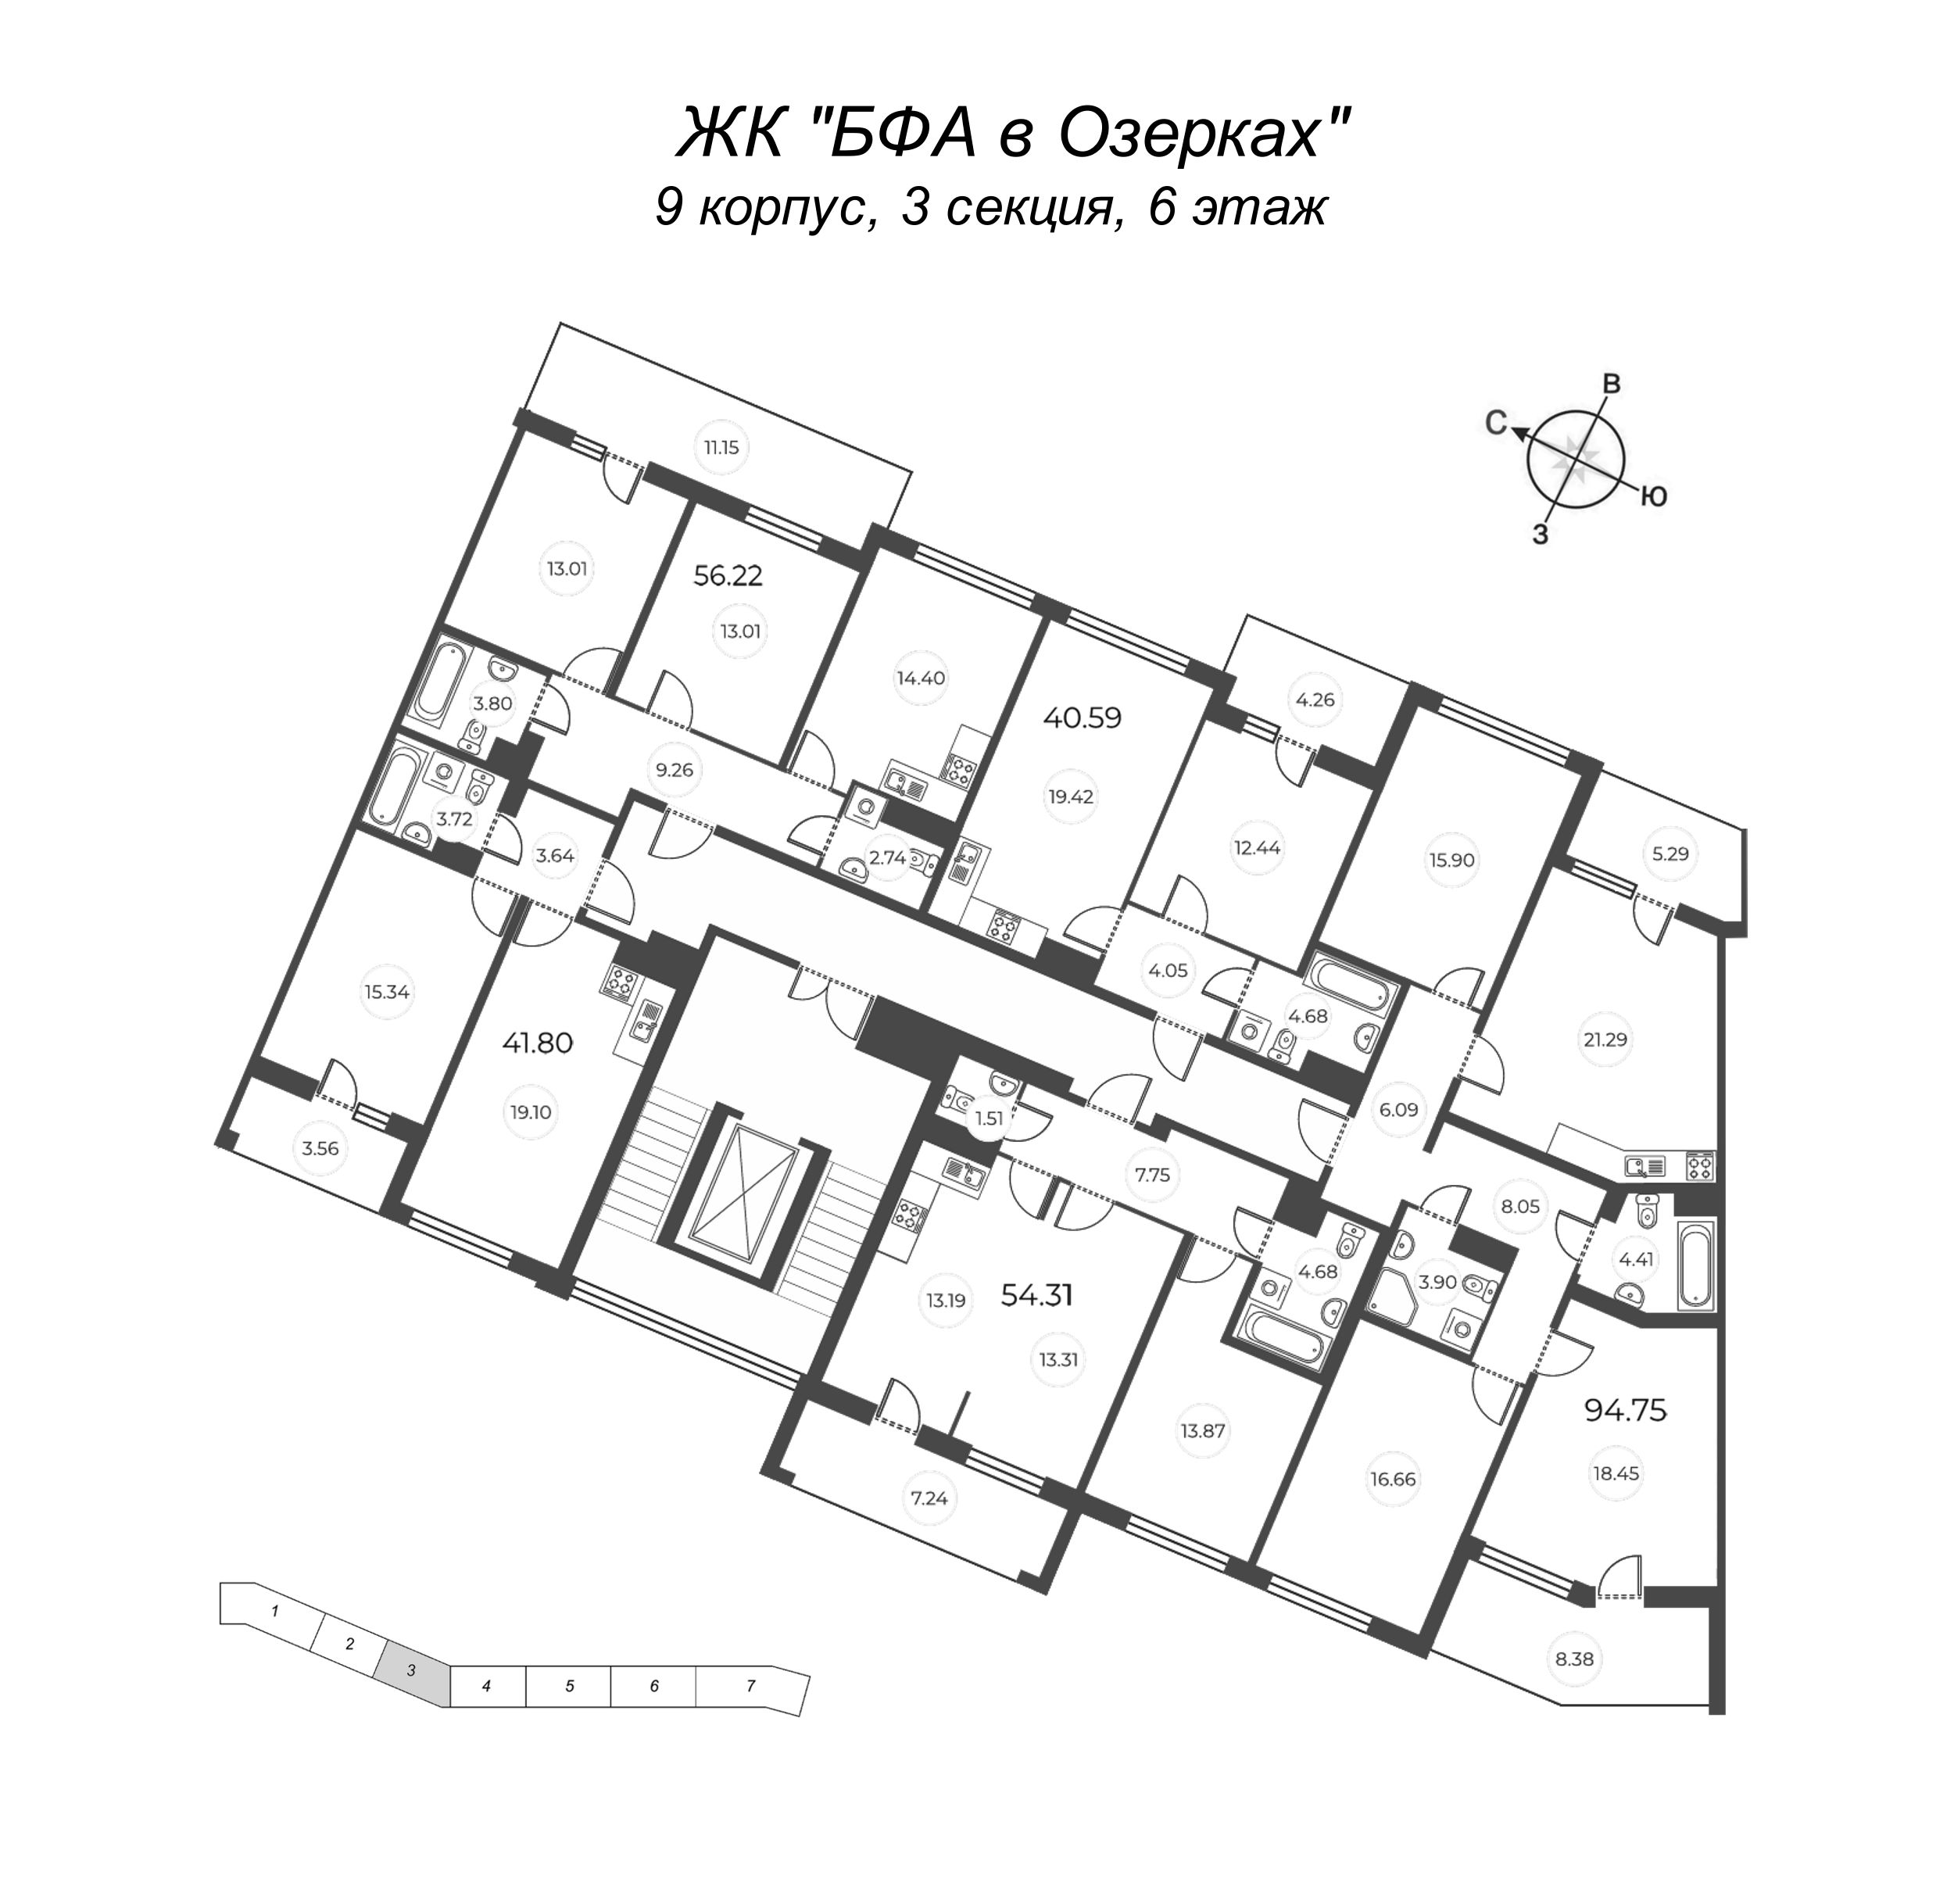 2-комнатная (Евро) квартира, 43.58 м² - планировка этажа